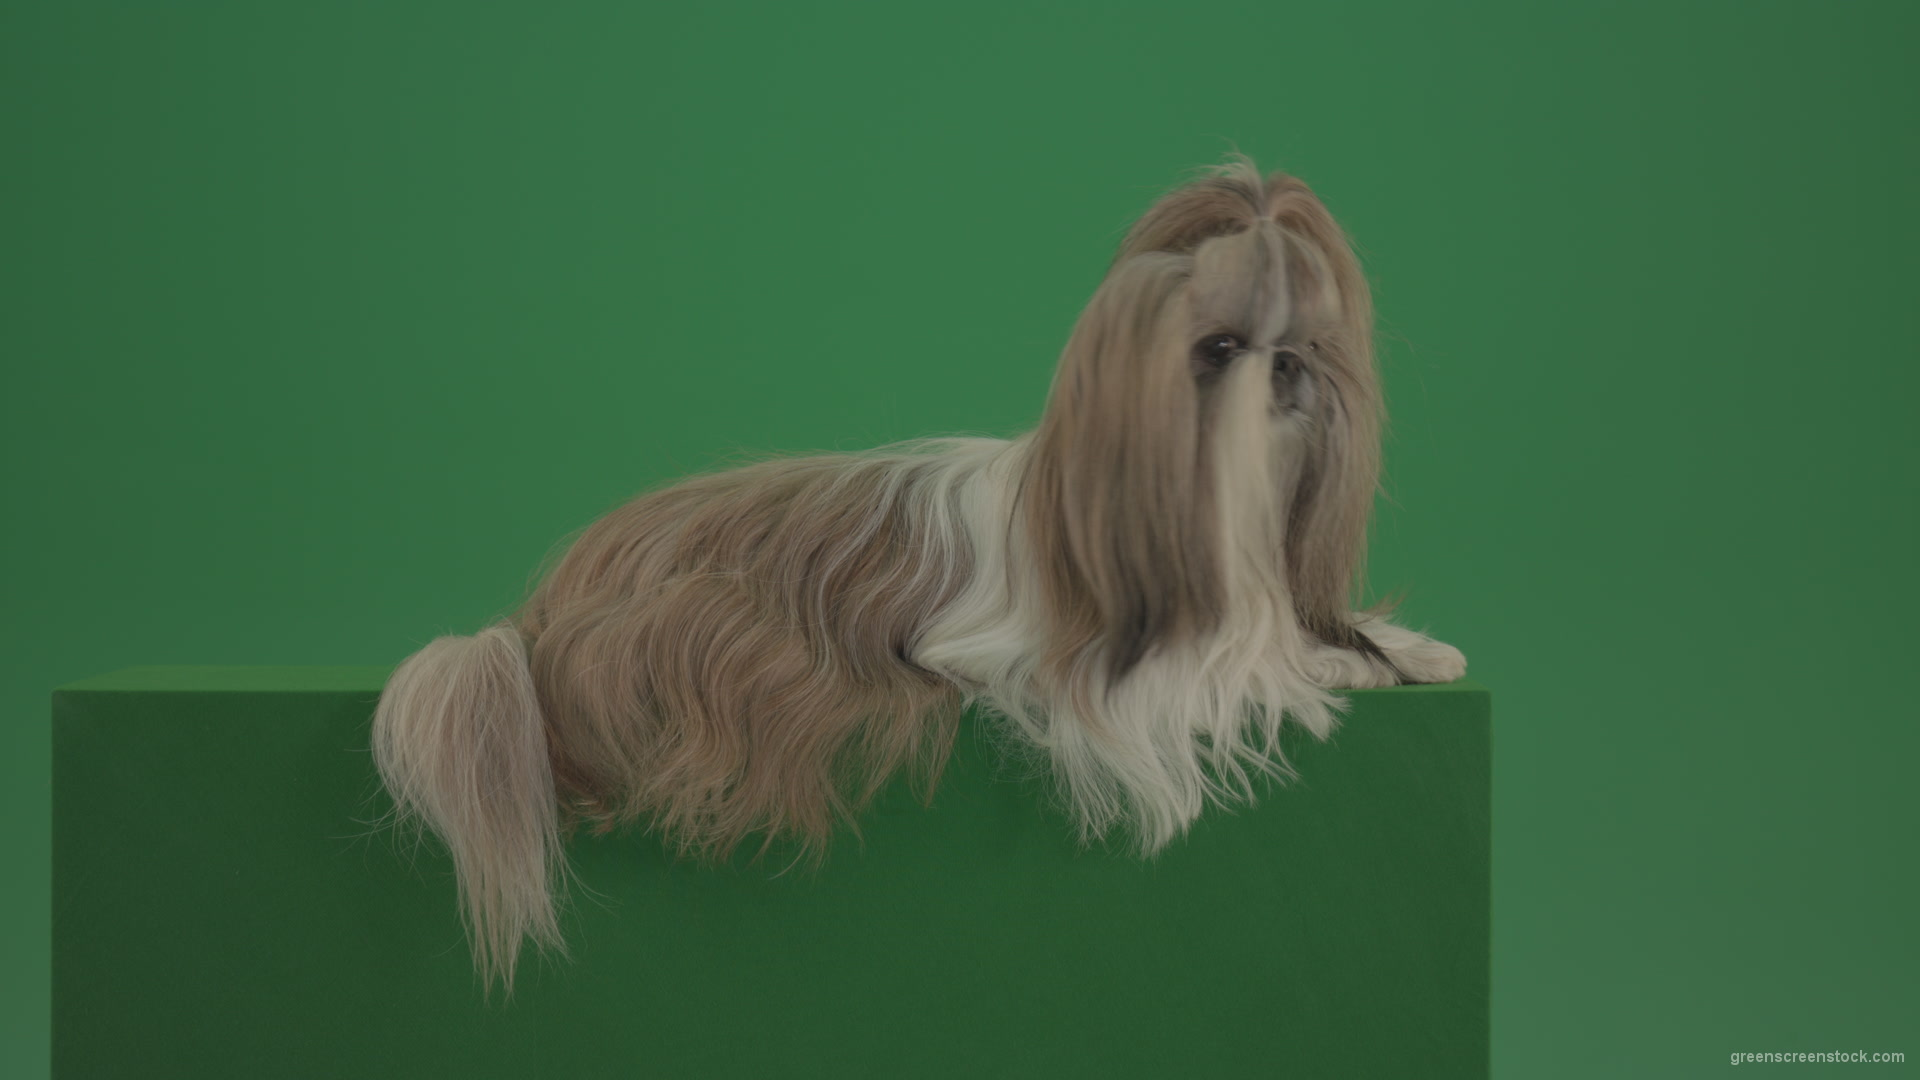 Luxury-bright-hair-Shihtzu-dog-pet-relaxing-on-green-screen-4K_002 Green Screen Stock